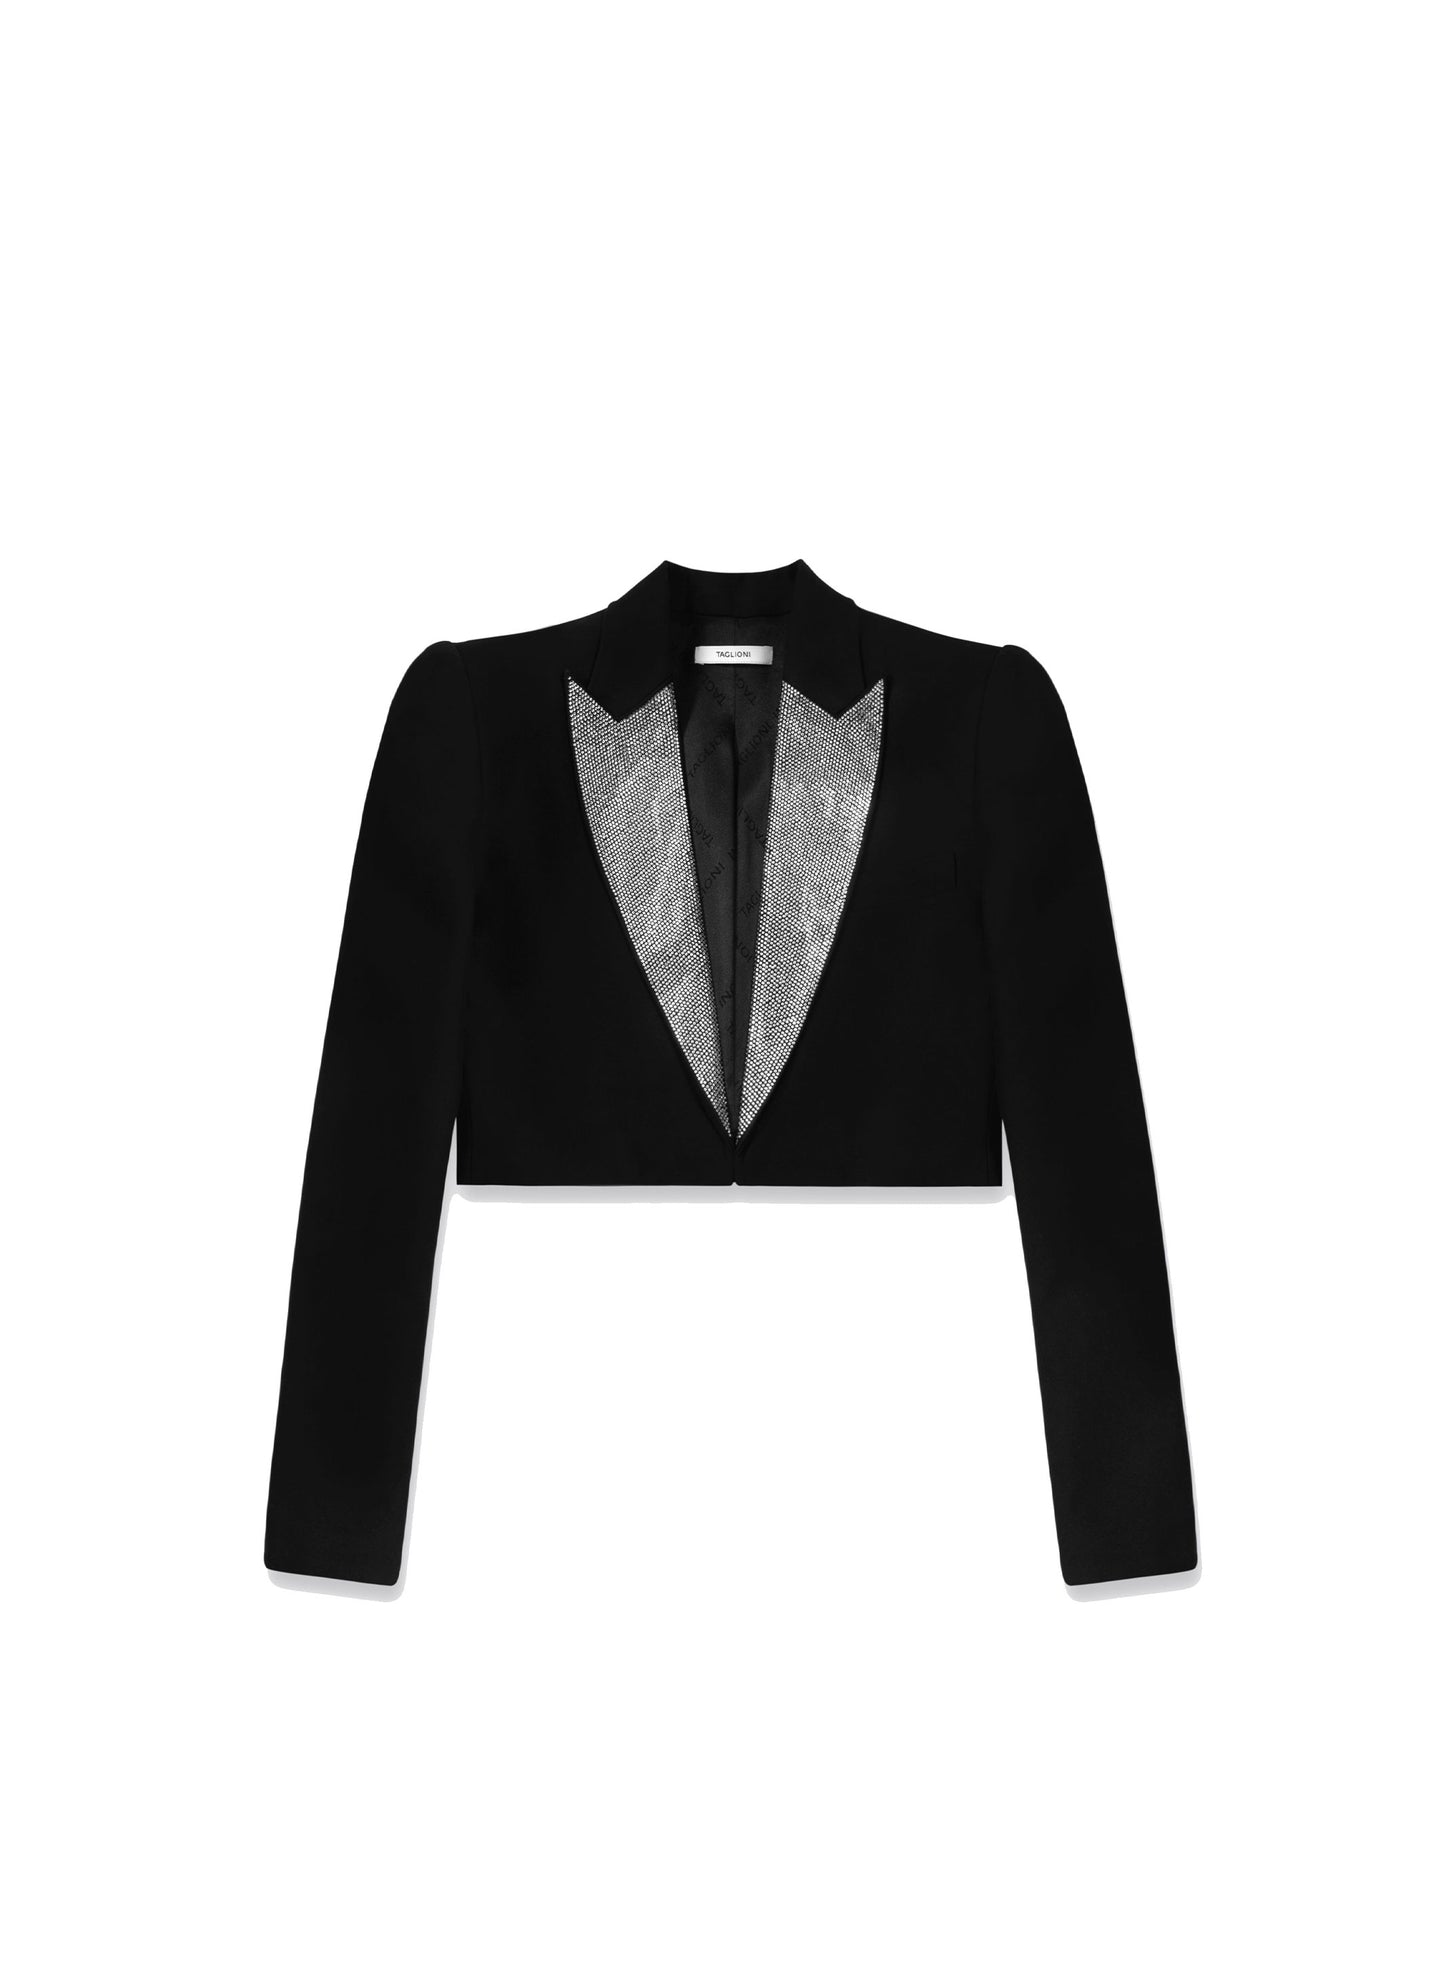 Short Rhinestone Suit Jacket in Black